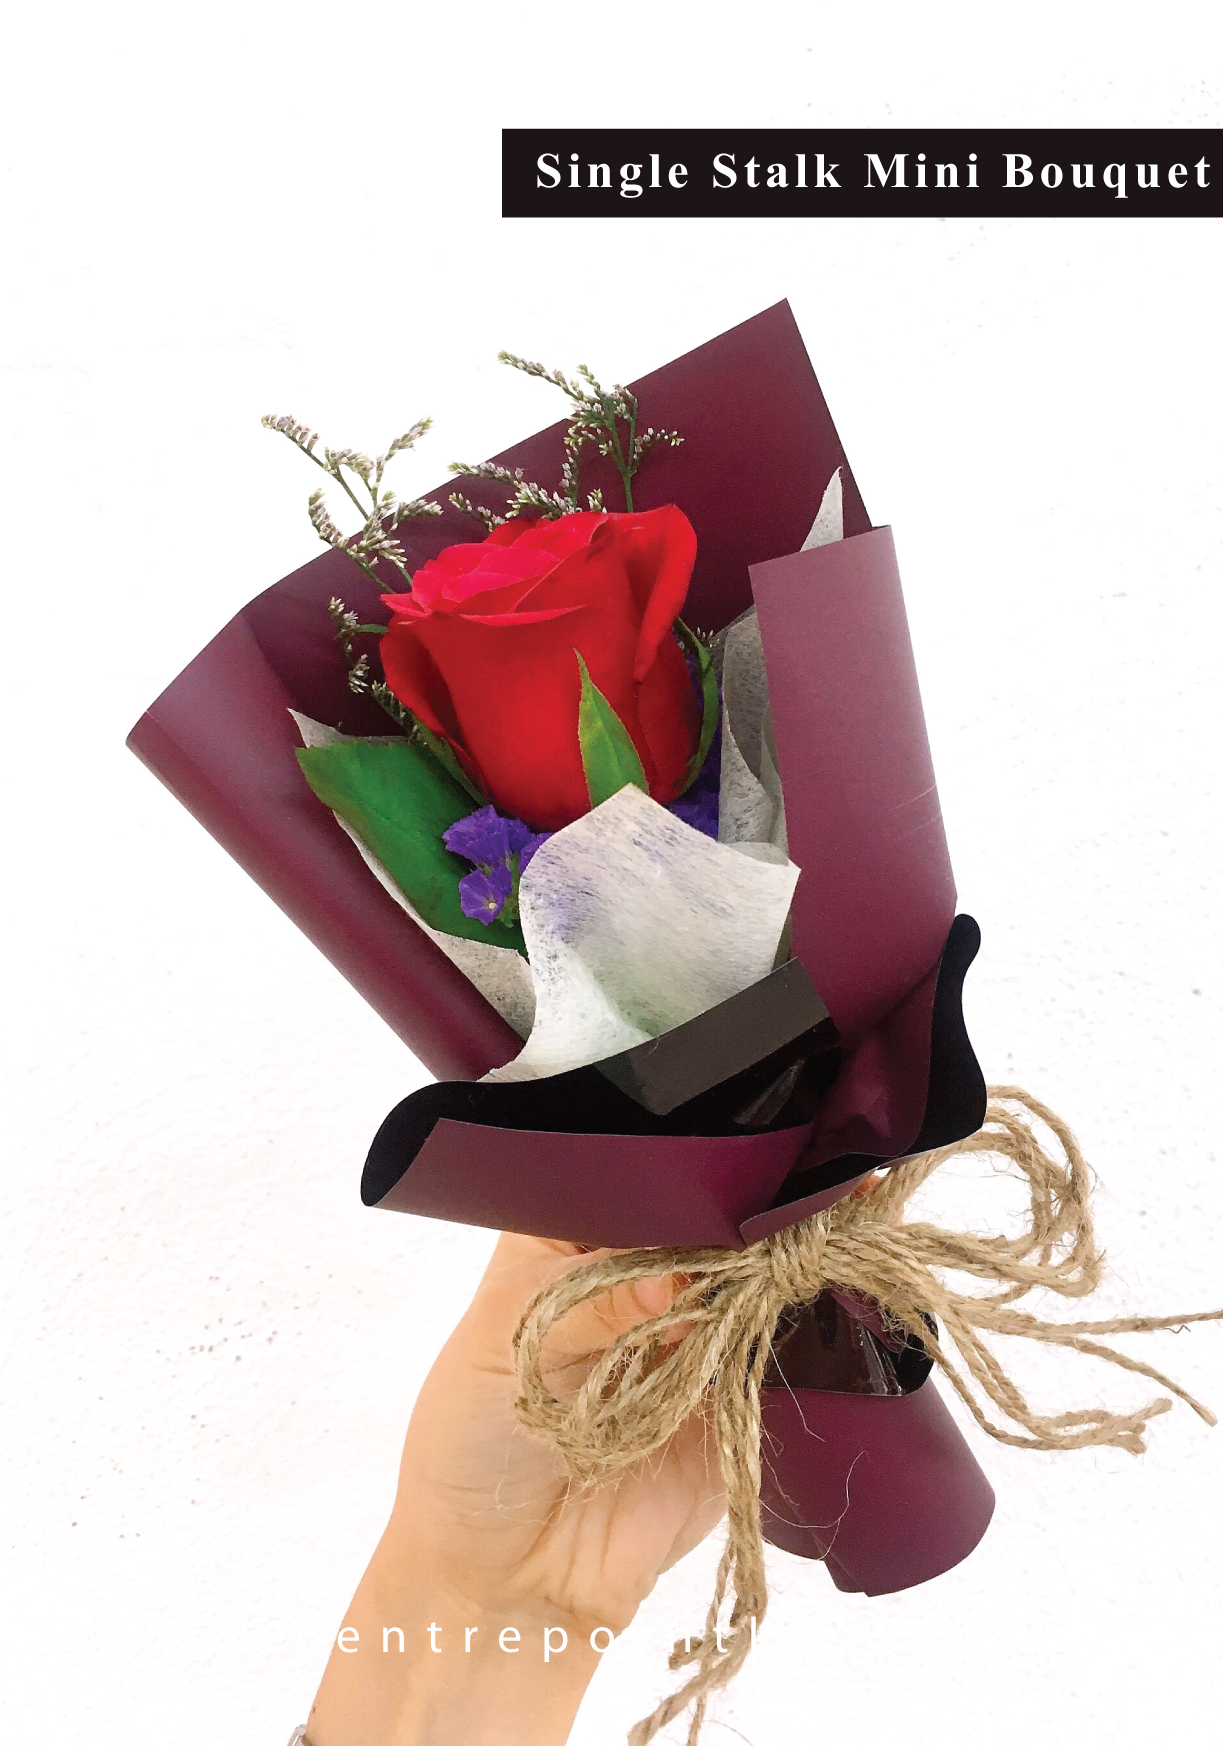 Single Stalk Mini Bouquet (RM 15.00)